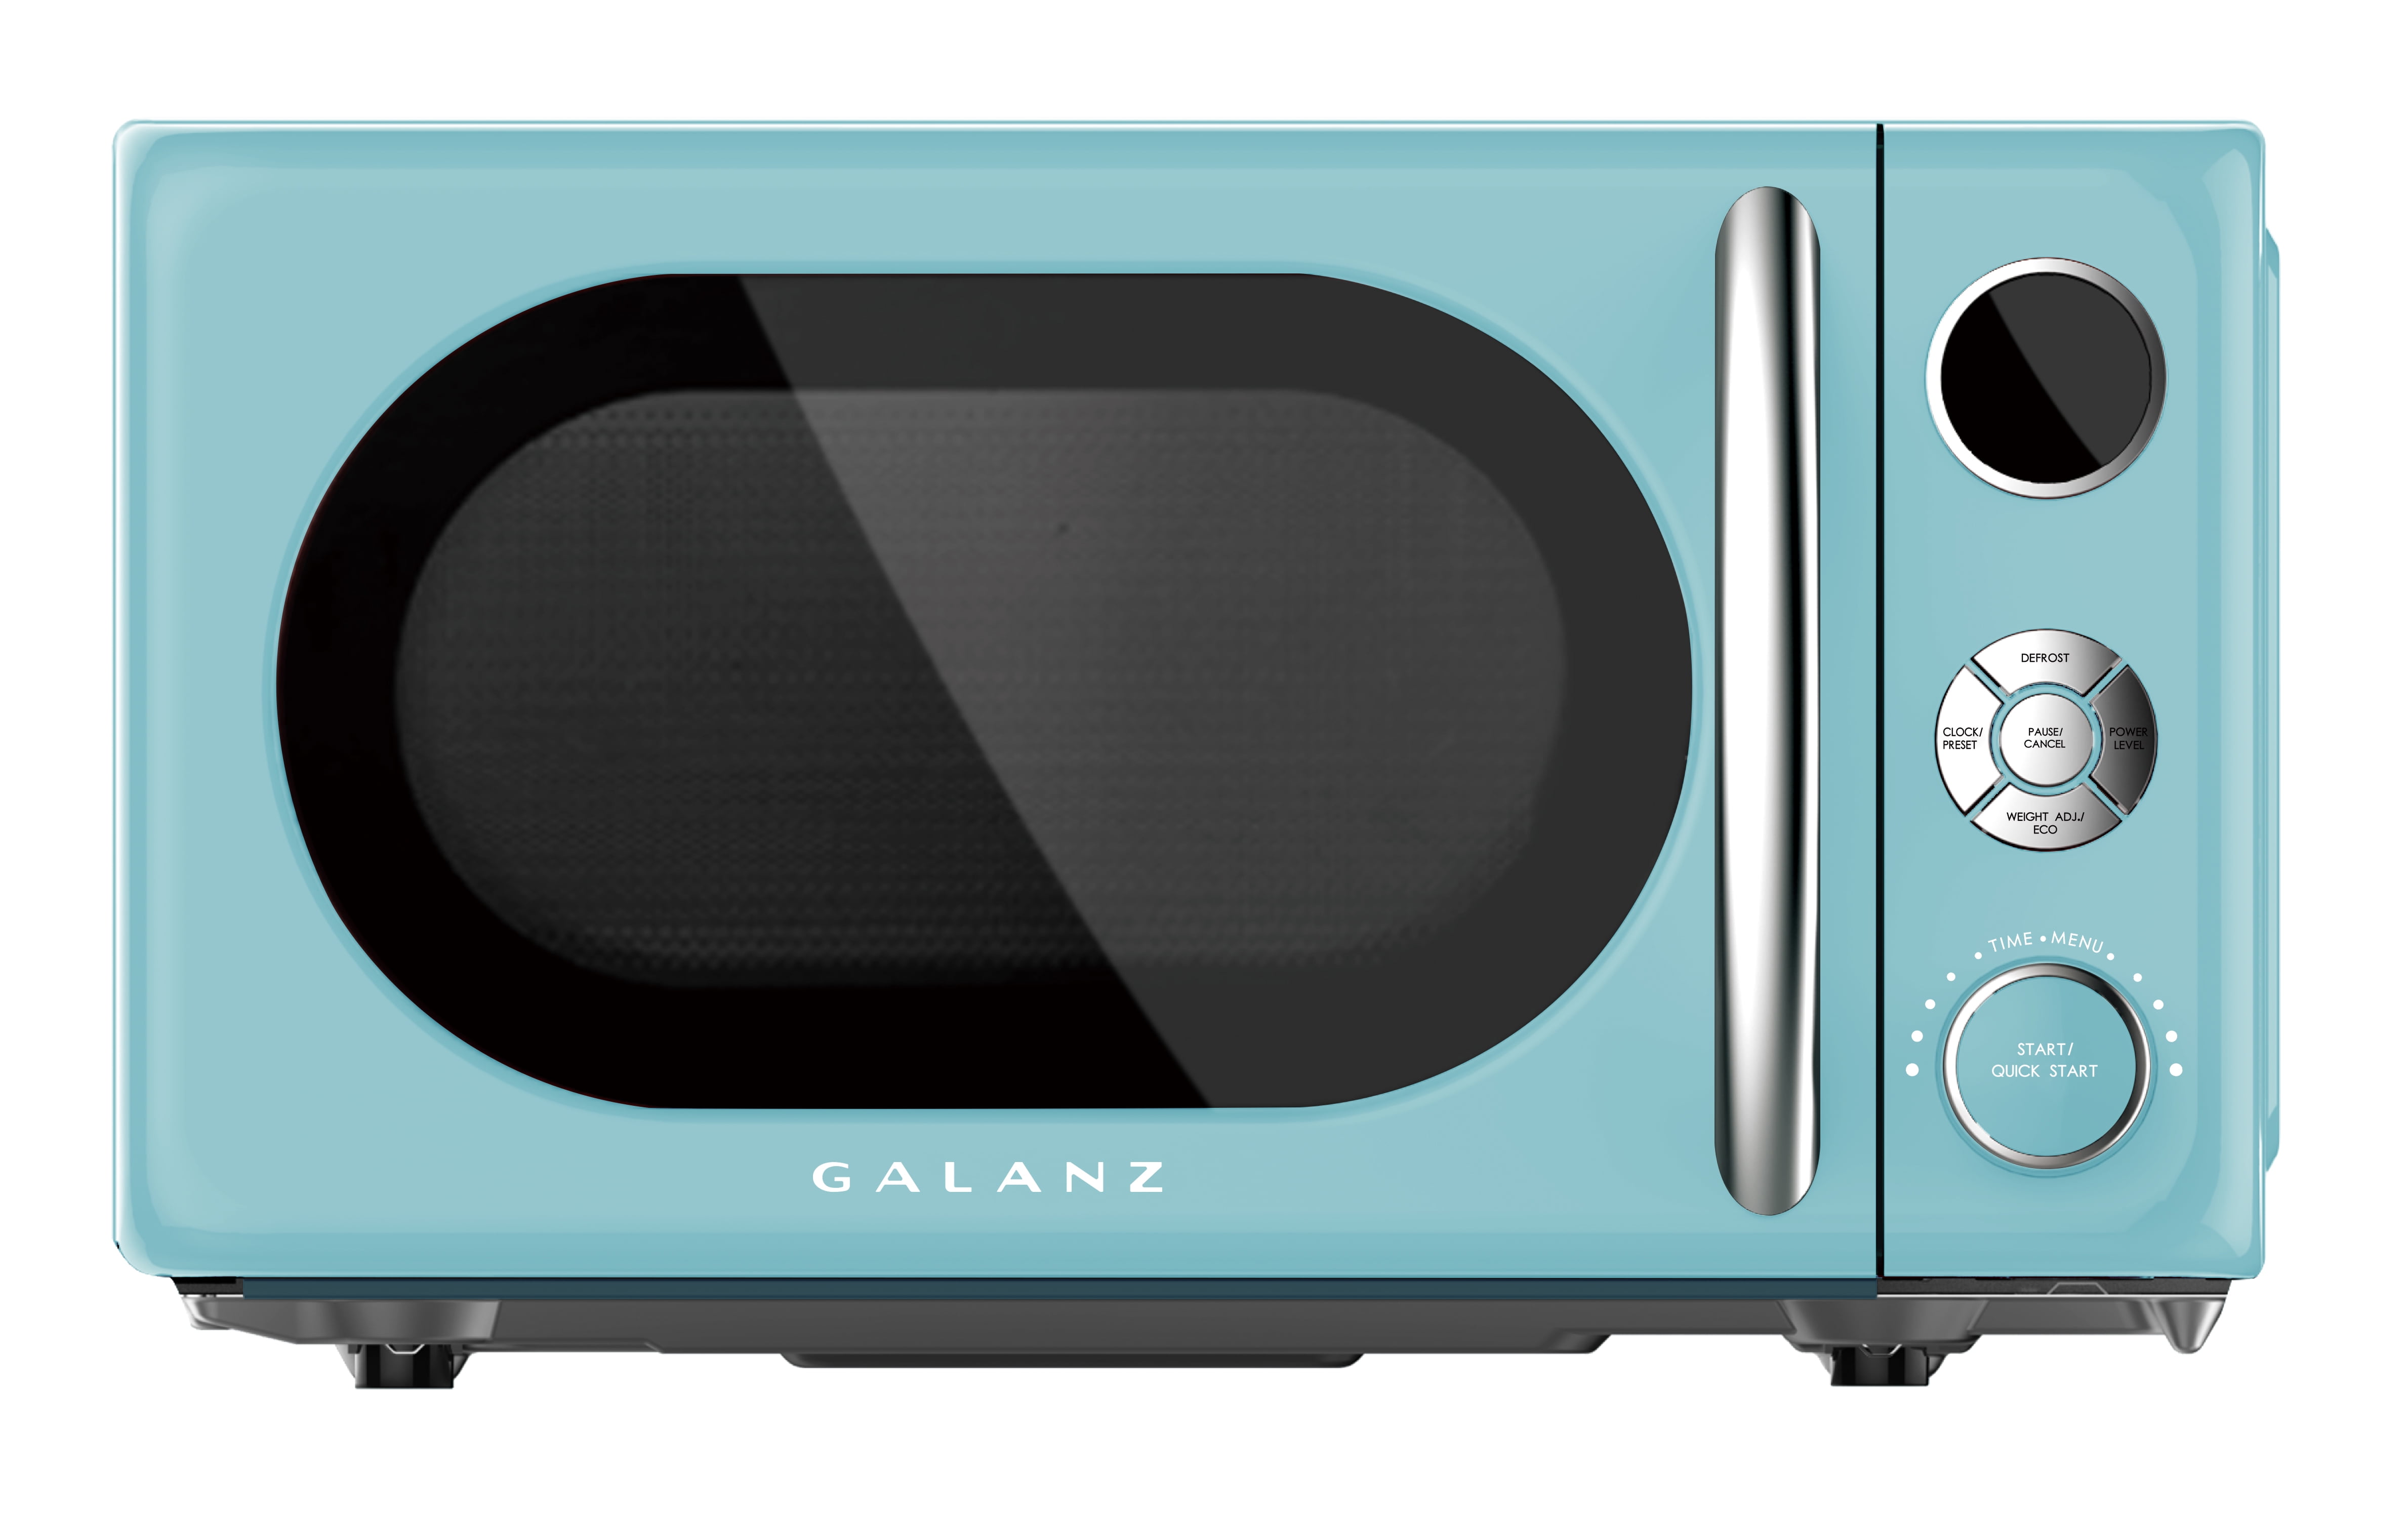 Galanz Glcmka07ber-07 Countertop Microwave Retro 0.7 Cu ft 700W, Blue